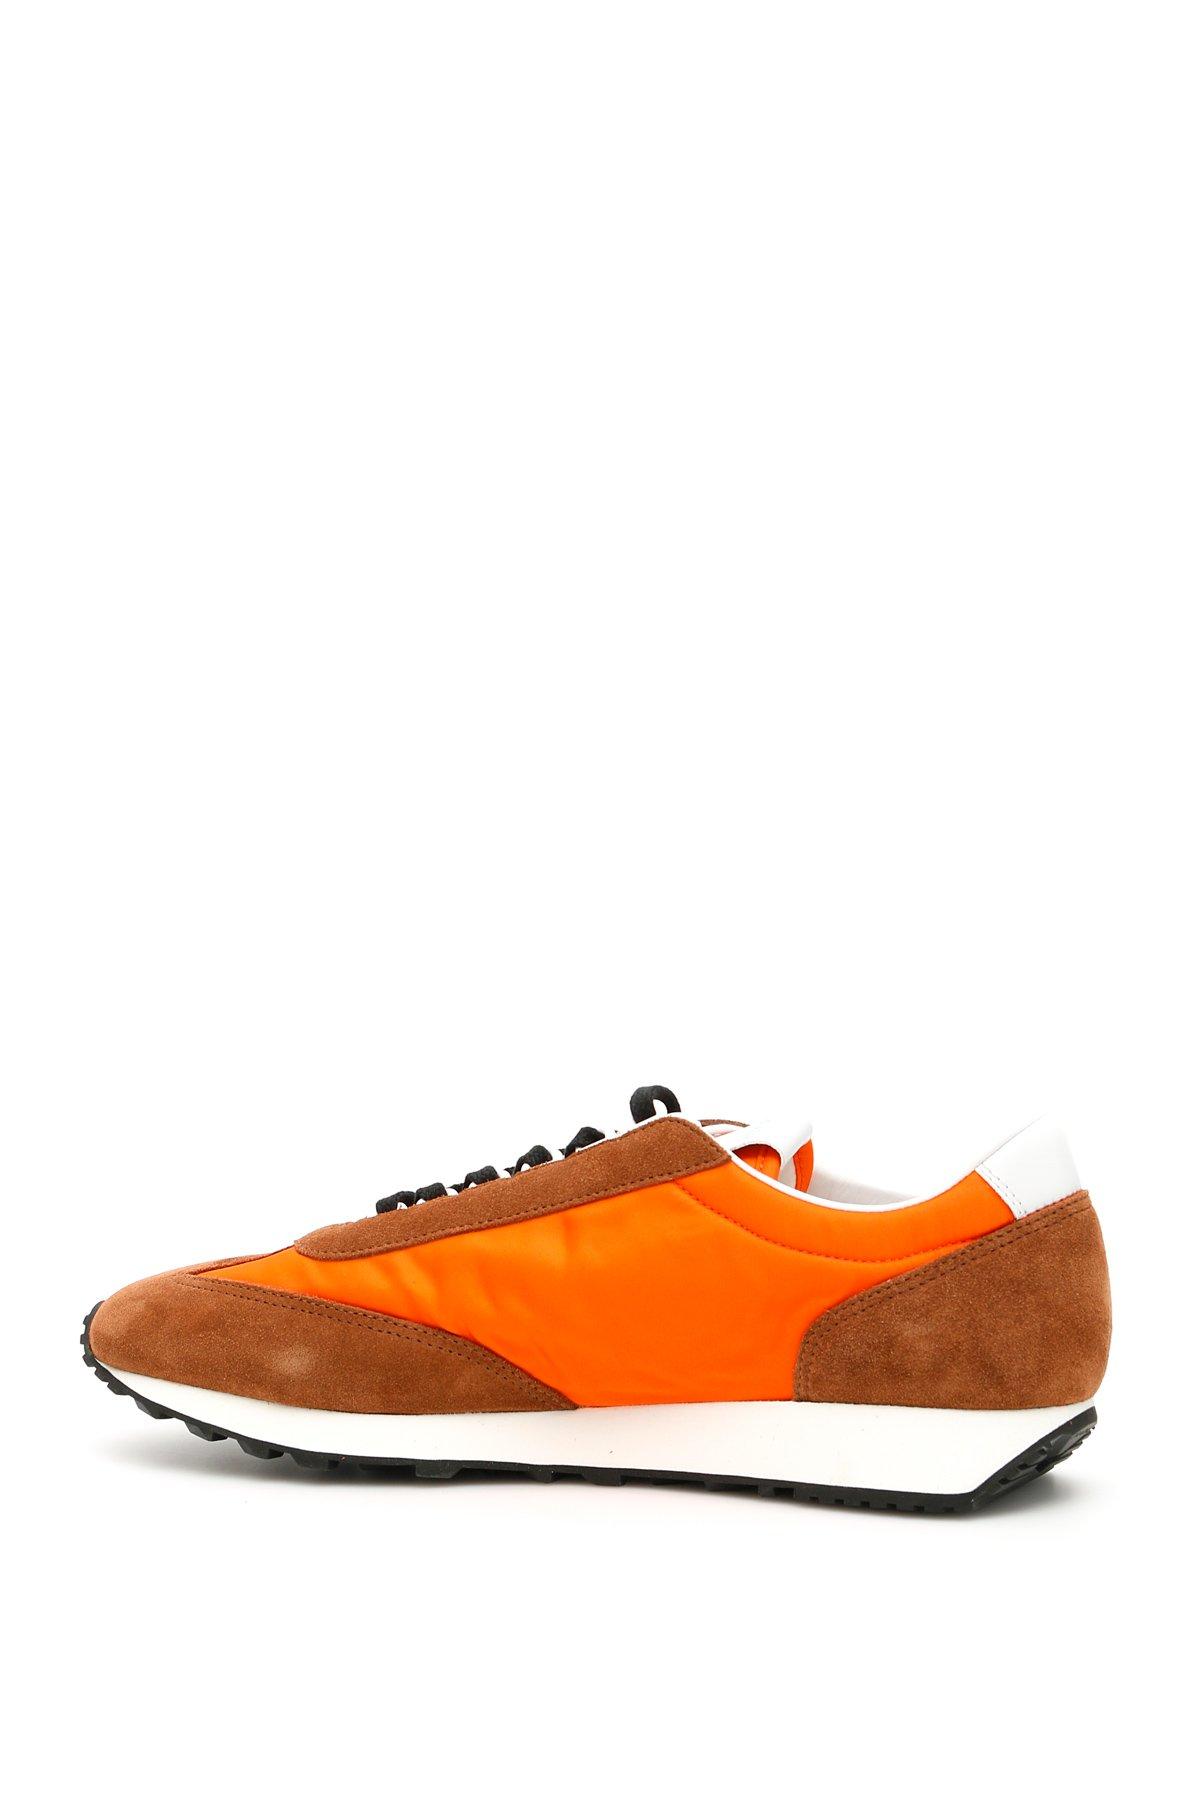 Prada Cotton Logo Lace-up Sneakers in Orange,Brown,White (Orange) for ...